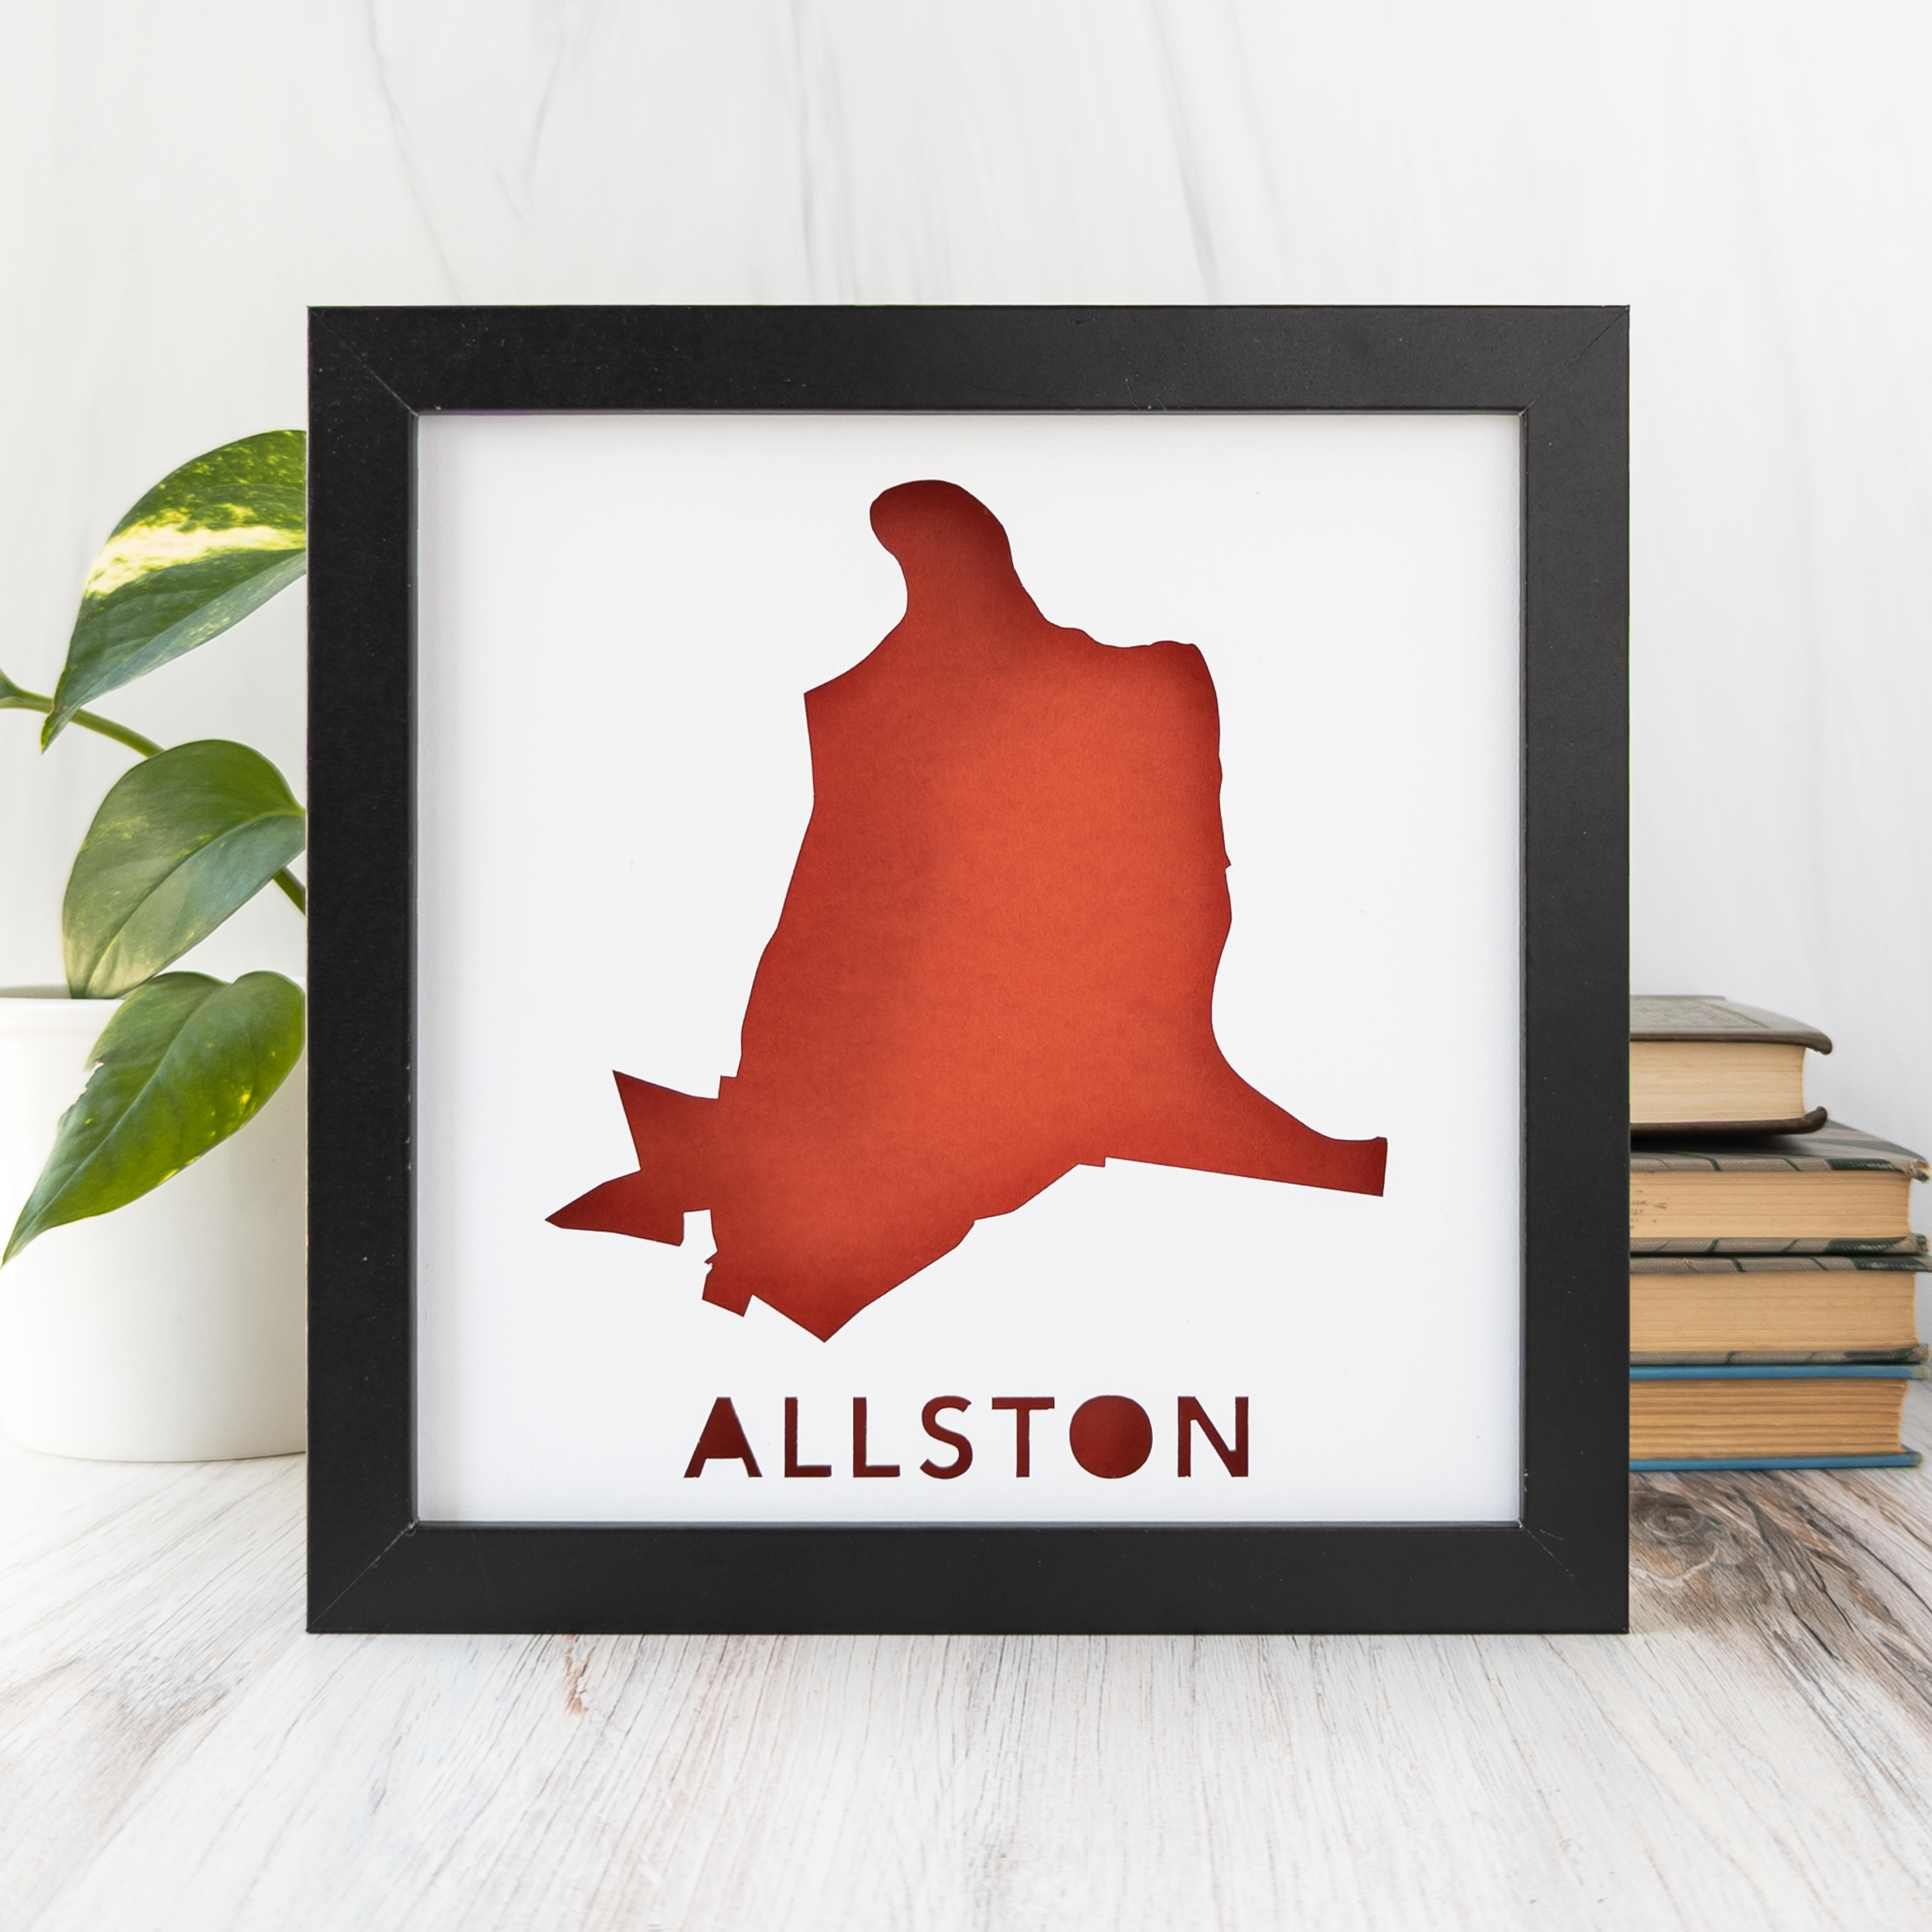 a framed dark orange map of Allston, a neighborhood of Boston, MA